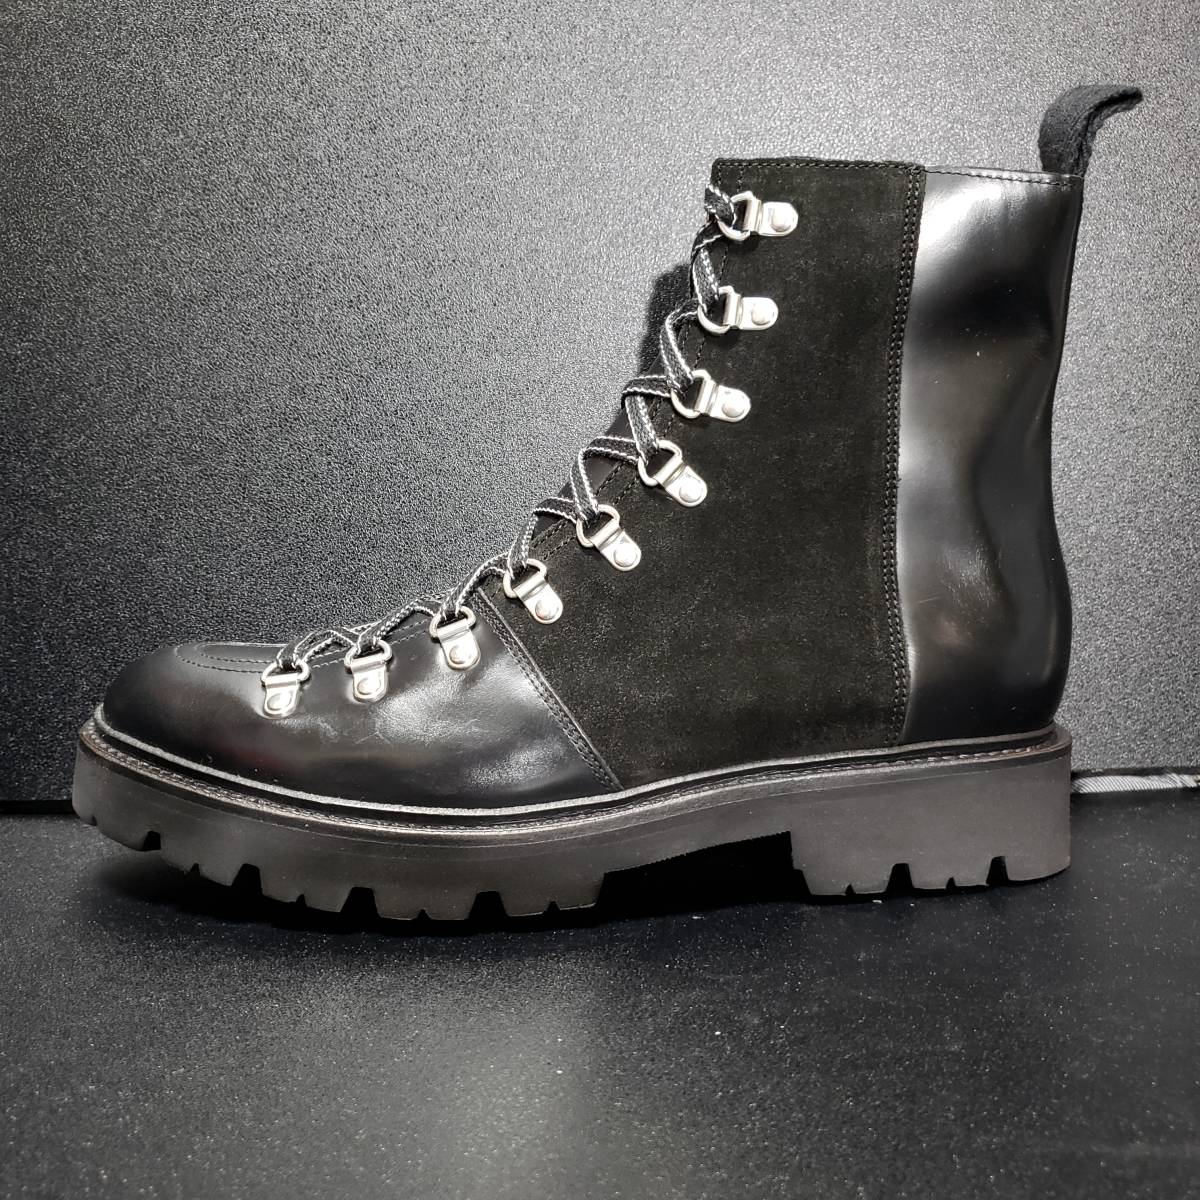  Glenn son(Grenson)G-TWO leather boots BRADY black 9G